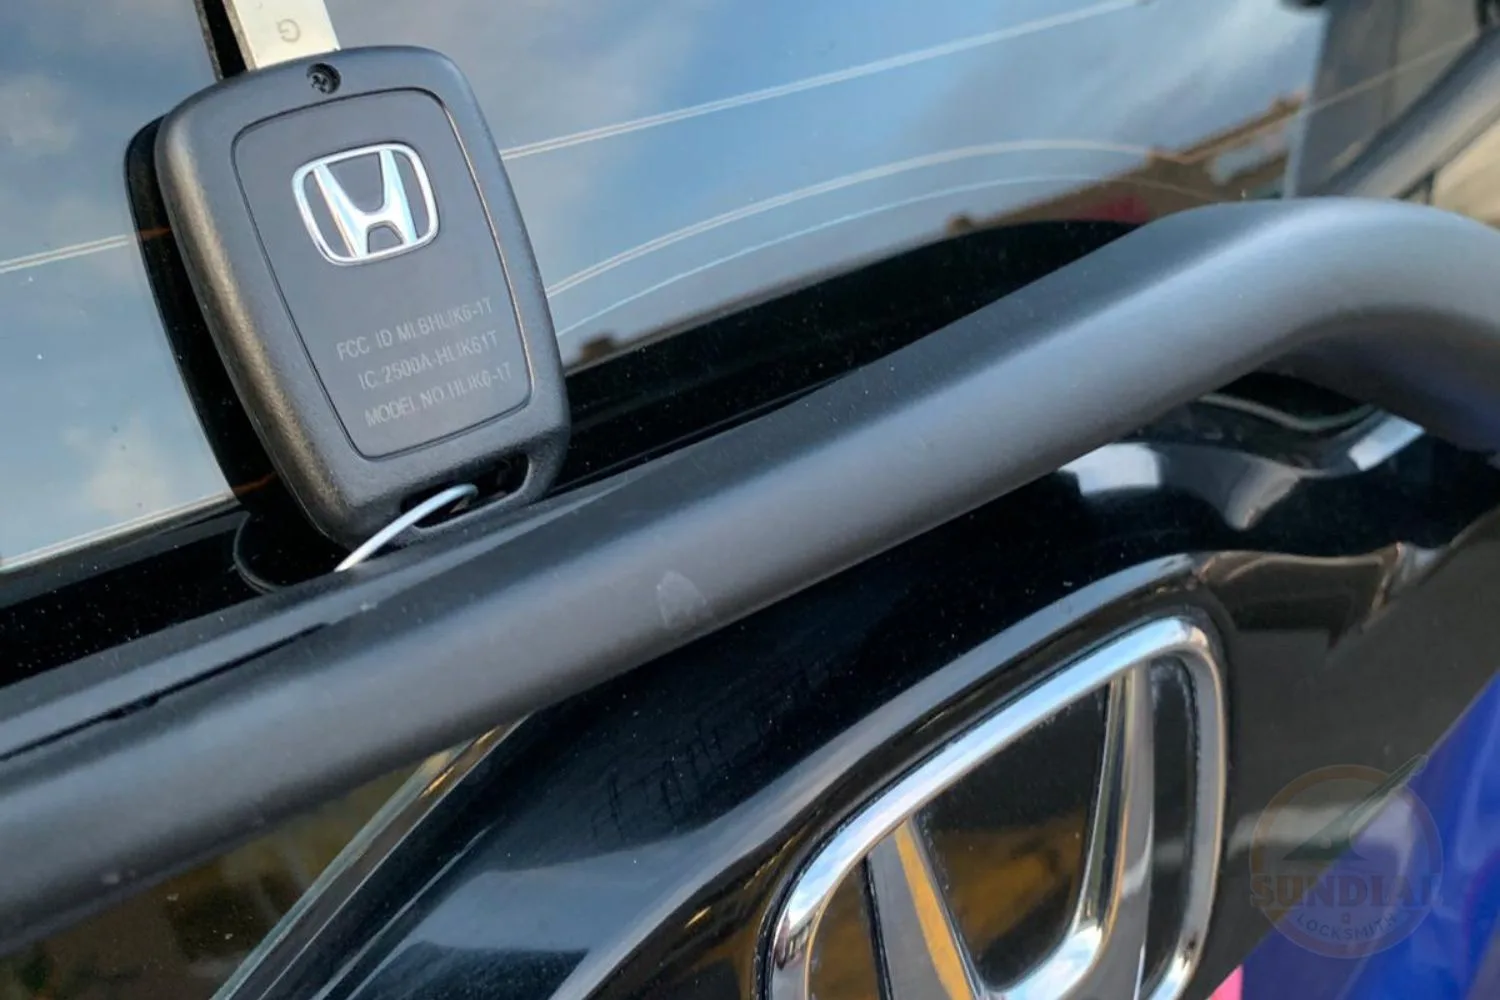 A close-up image of a black Honda key fob with the Honda logo, attached to a key, resting on a car's chrome handle.